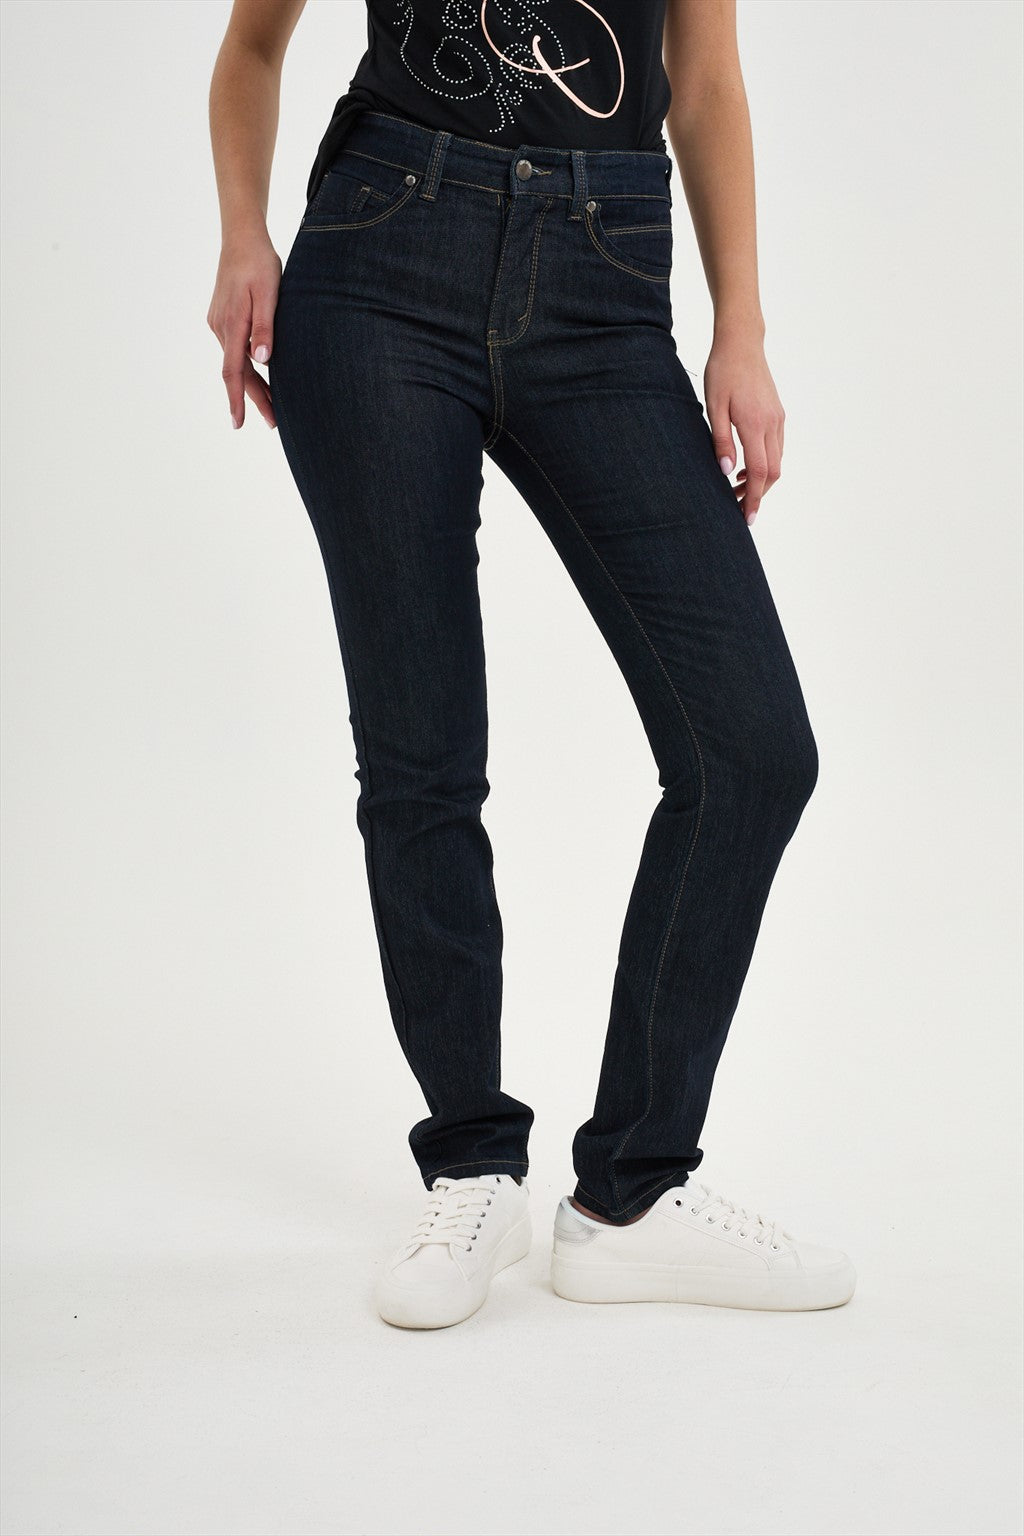 High Waist Denim Pants Blue Jeans Women's Peg Leg Jeans Trousers Hipster  Grunge Tapered Leg Jeans Size 30 -  Canada